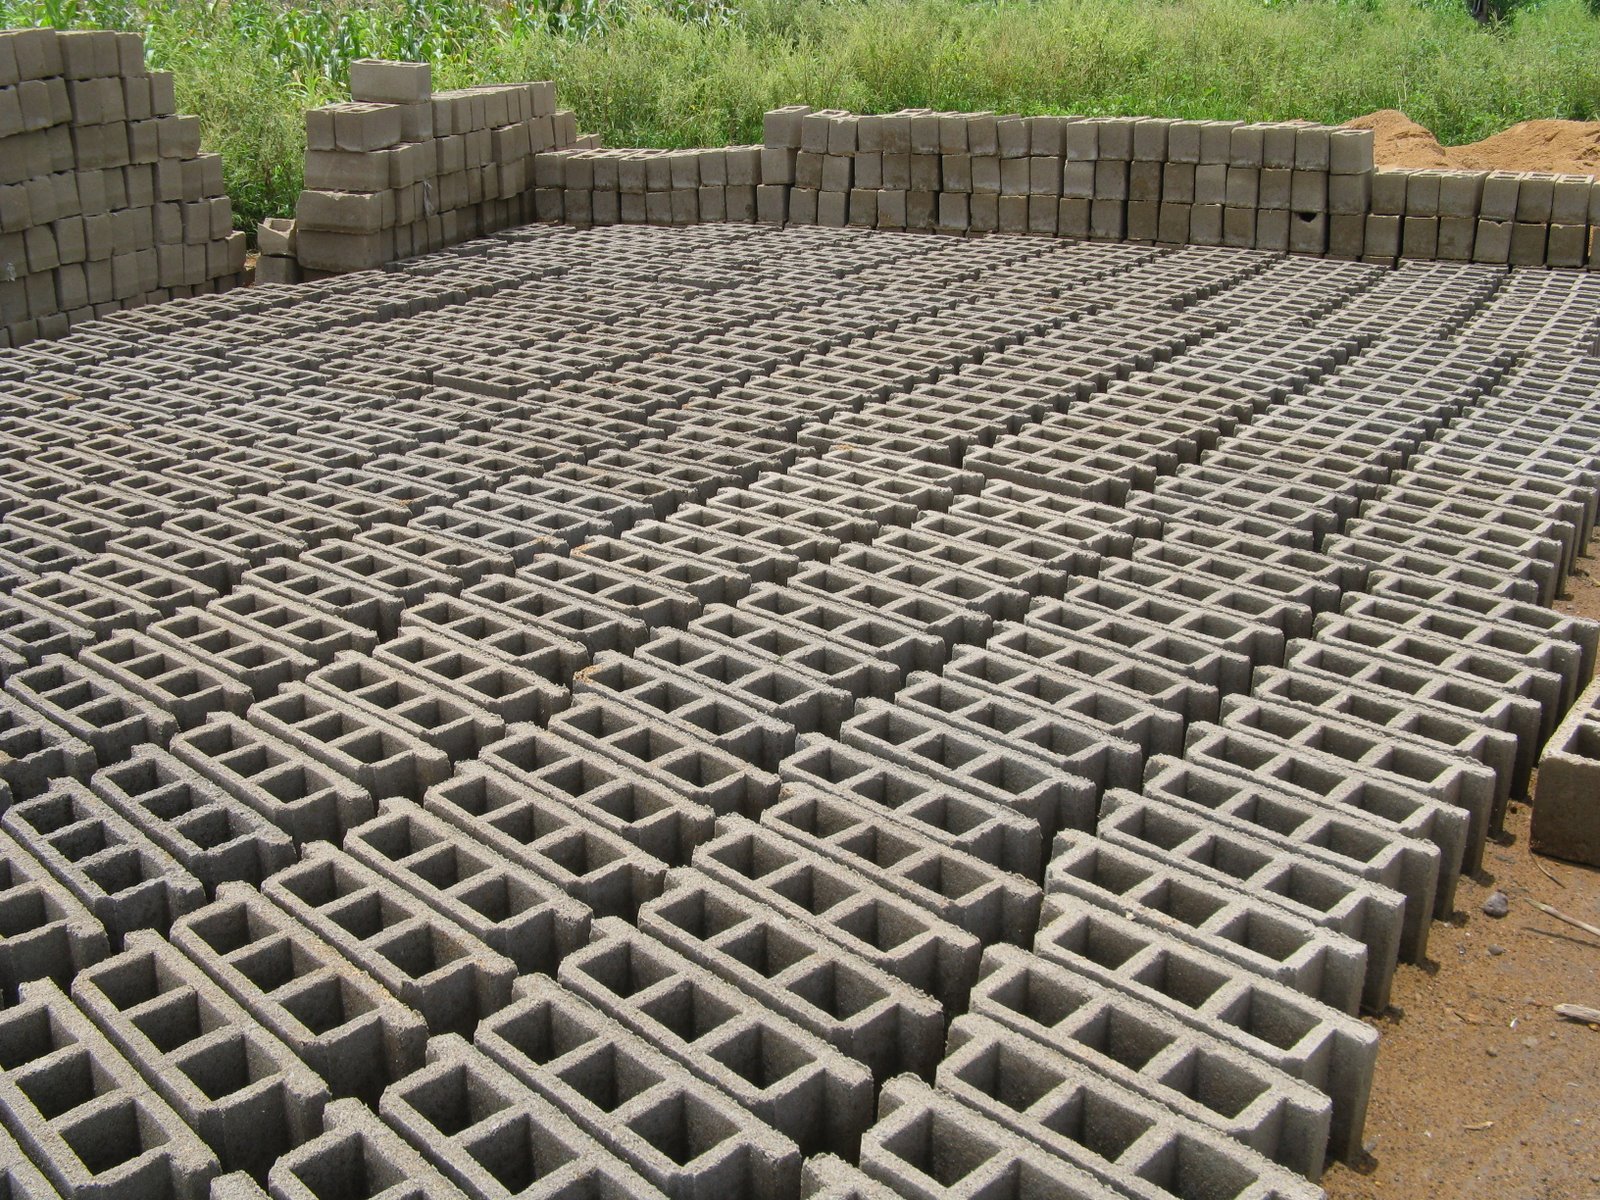 Making concrete blocks by hand